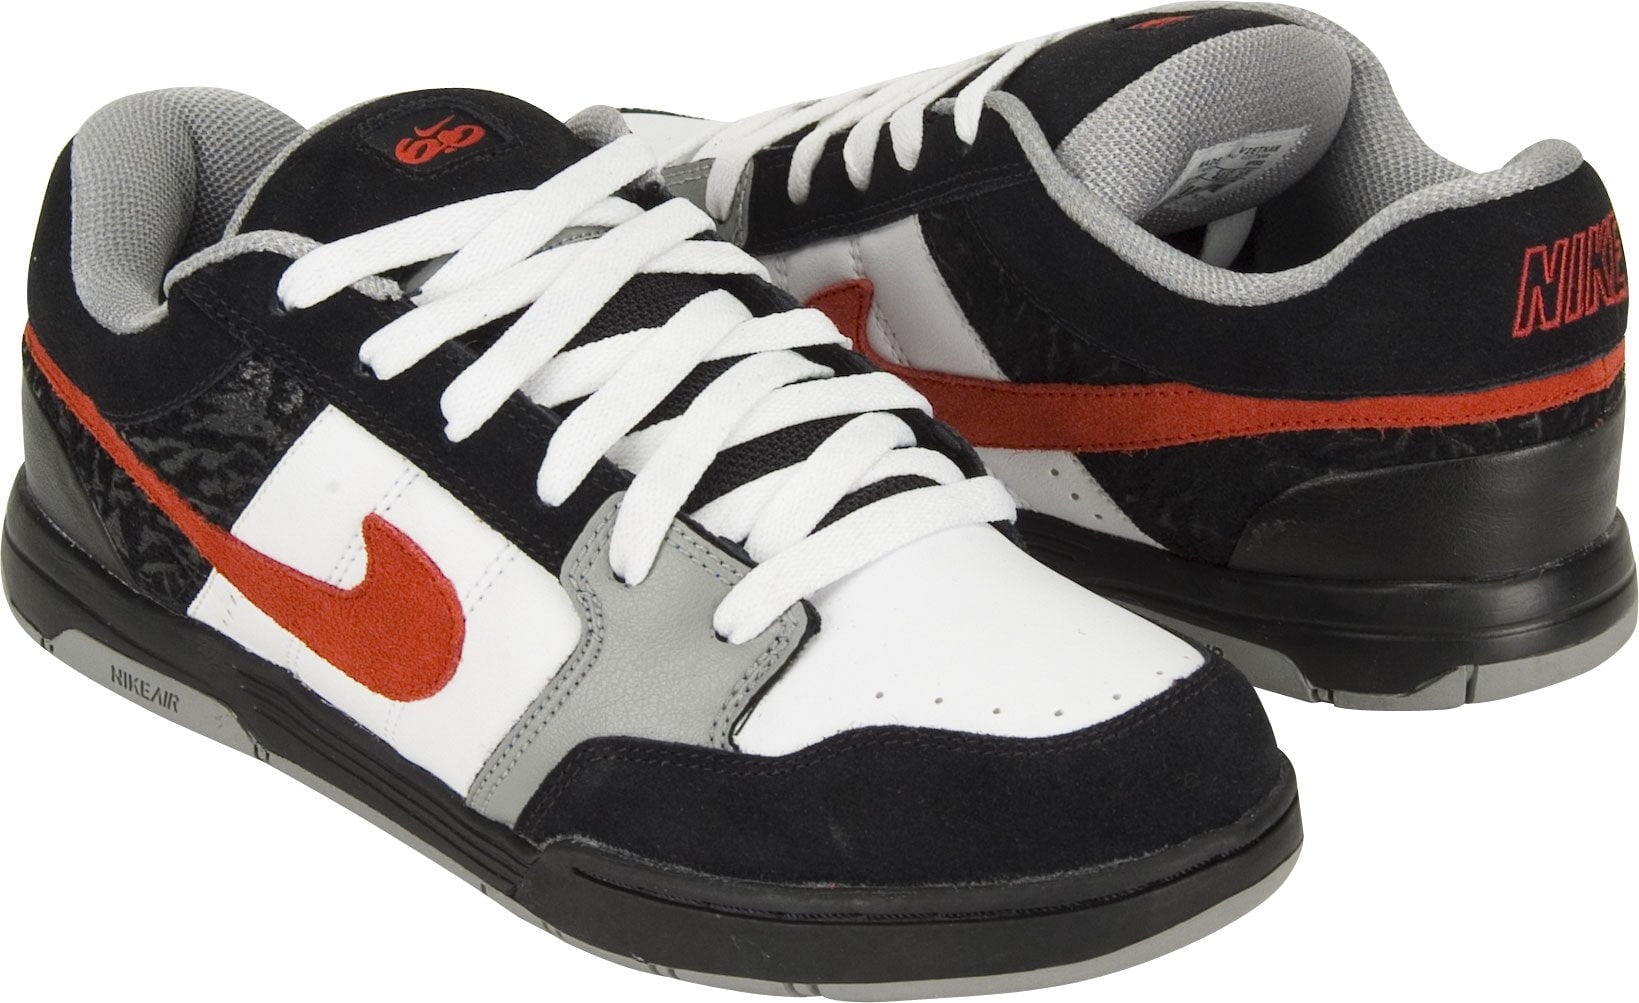 Morse code warmte Religieus Nike SB 6.0 Air Mogan Black/White/Red Skateboard Shoes Men Size 10 -  Walmart.com